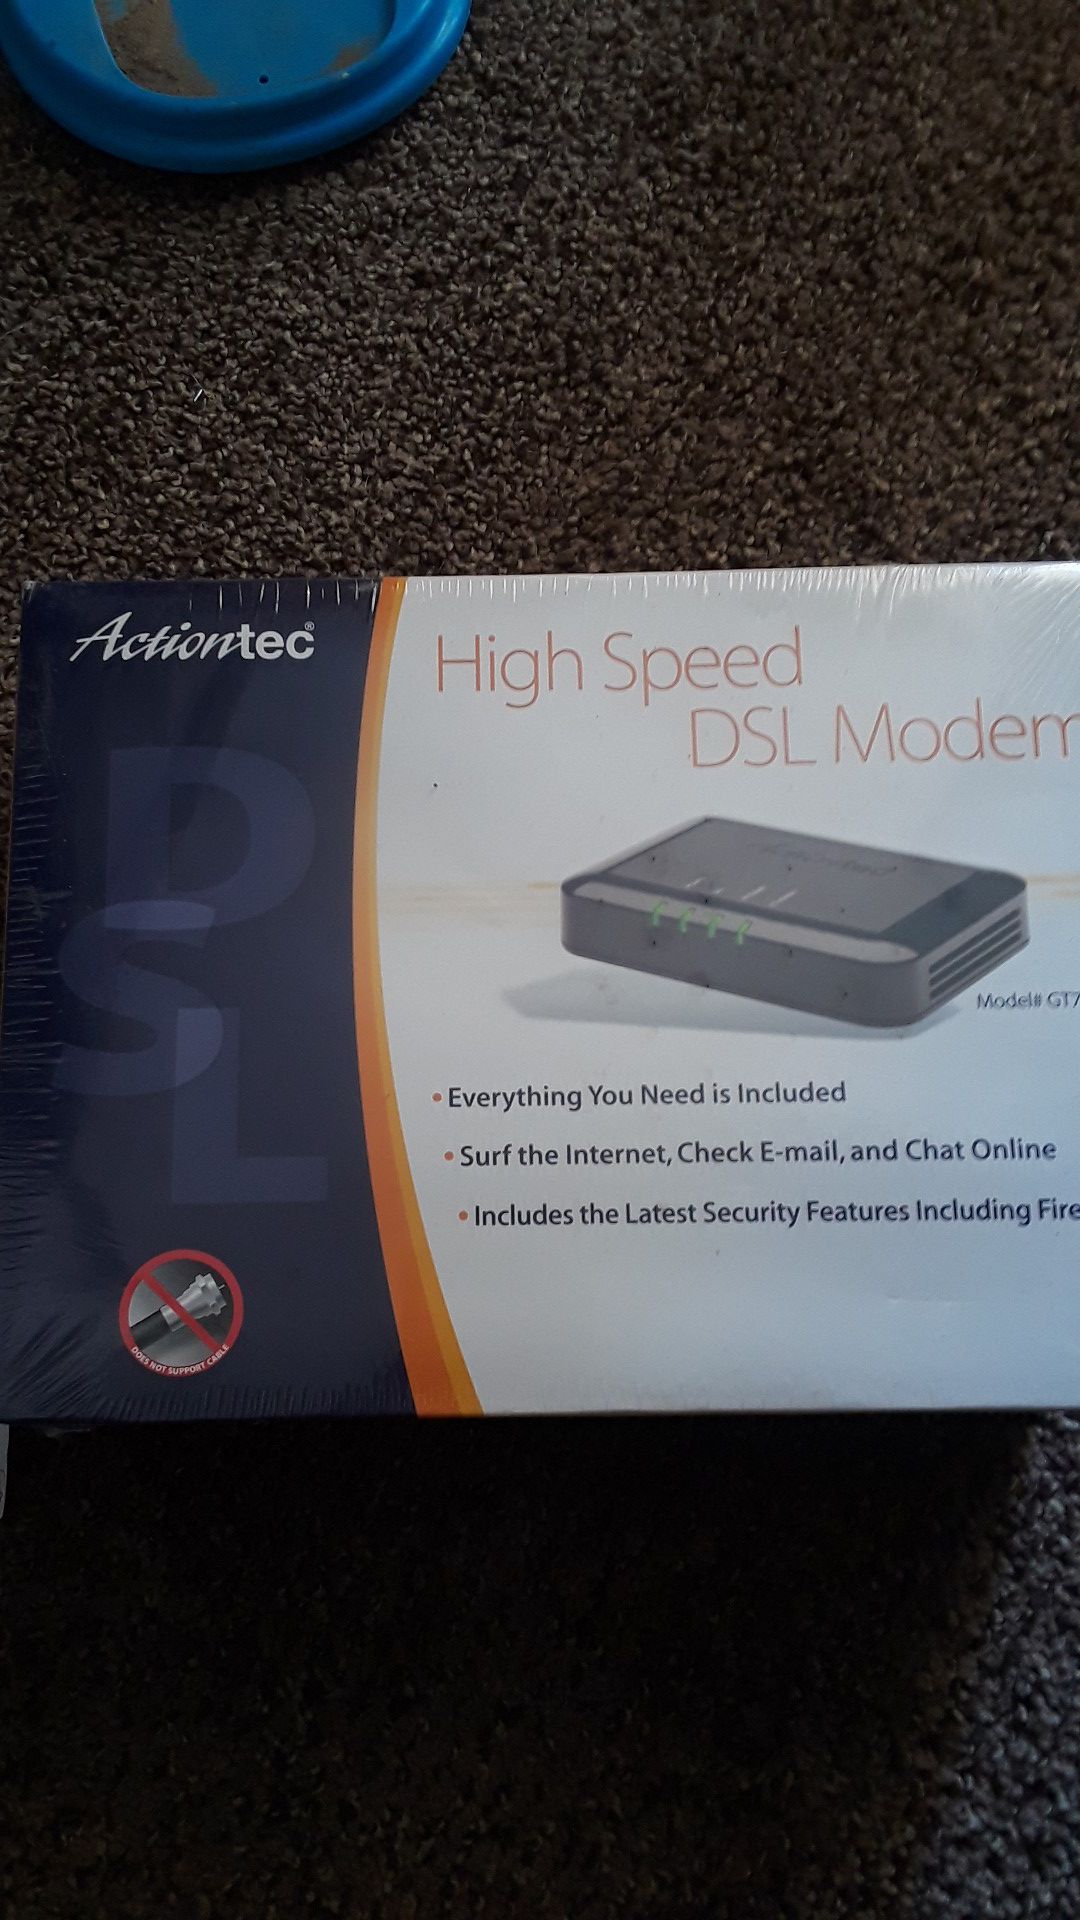 High speed DSL modem brand new unopened